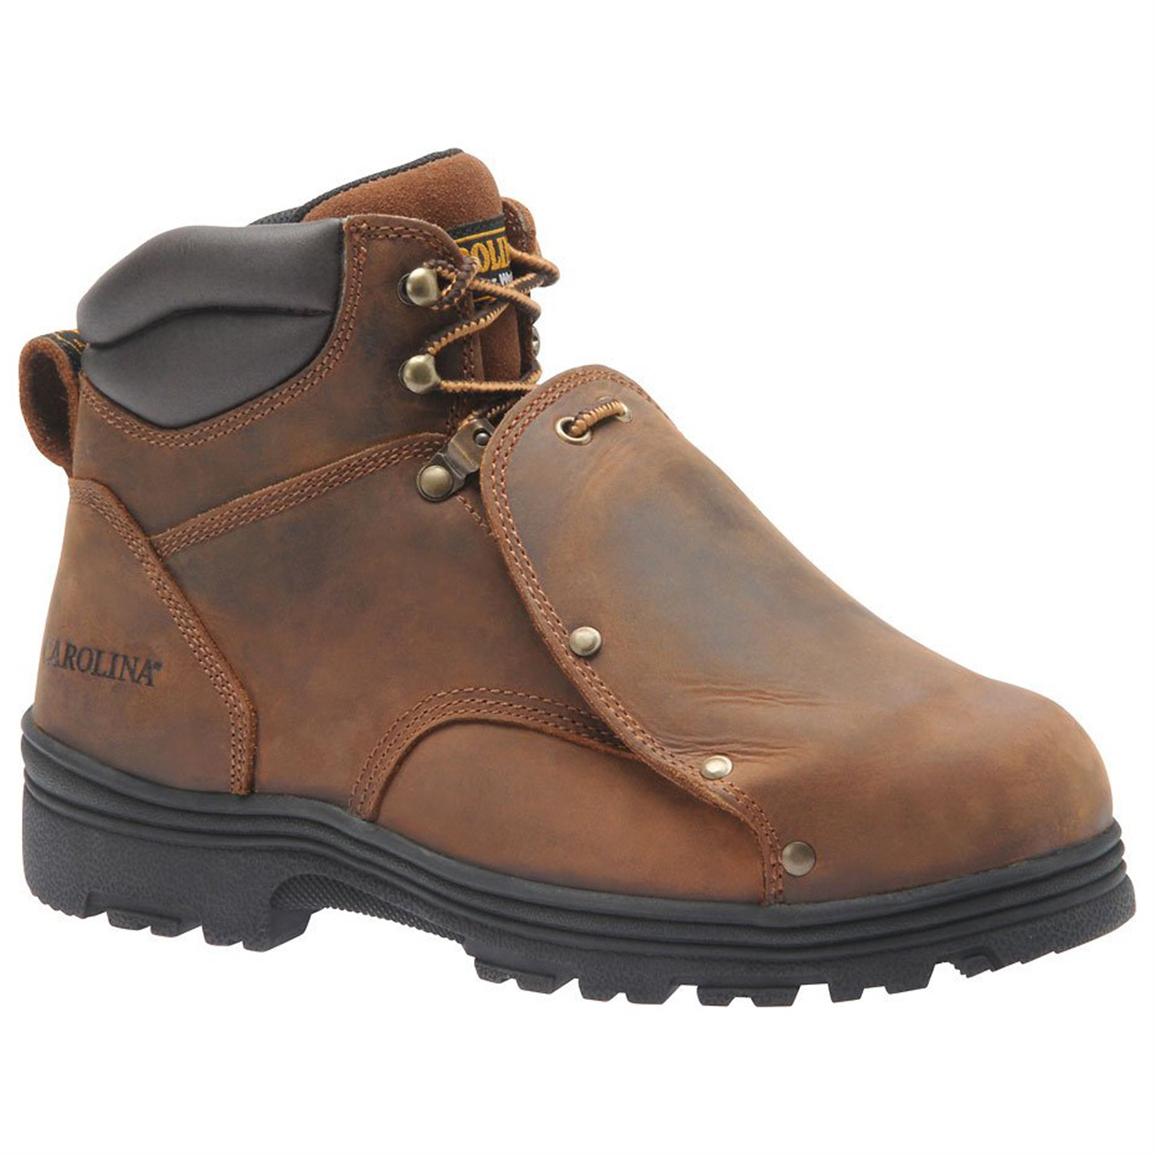 Men's Carolina® SVB 6 inch External Metguard Steel Toe Work Boots, Copper